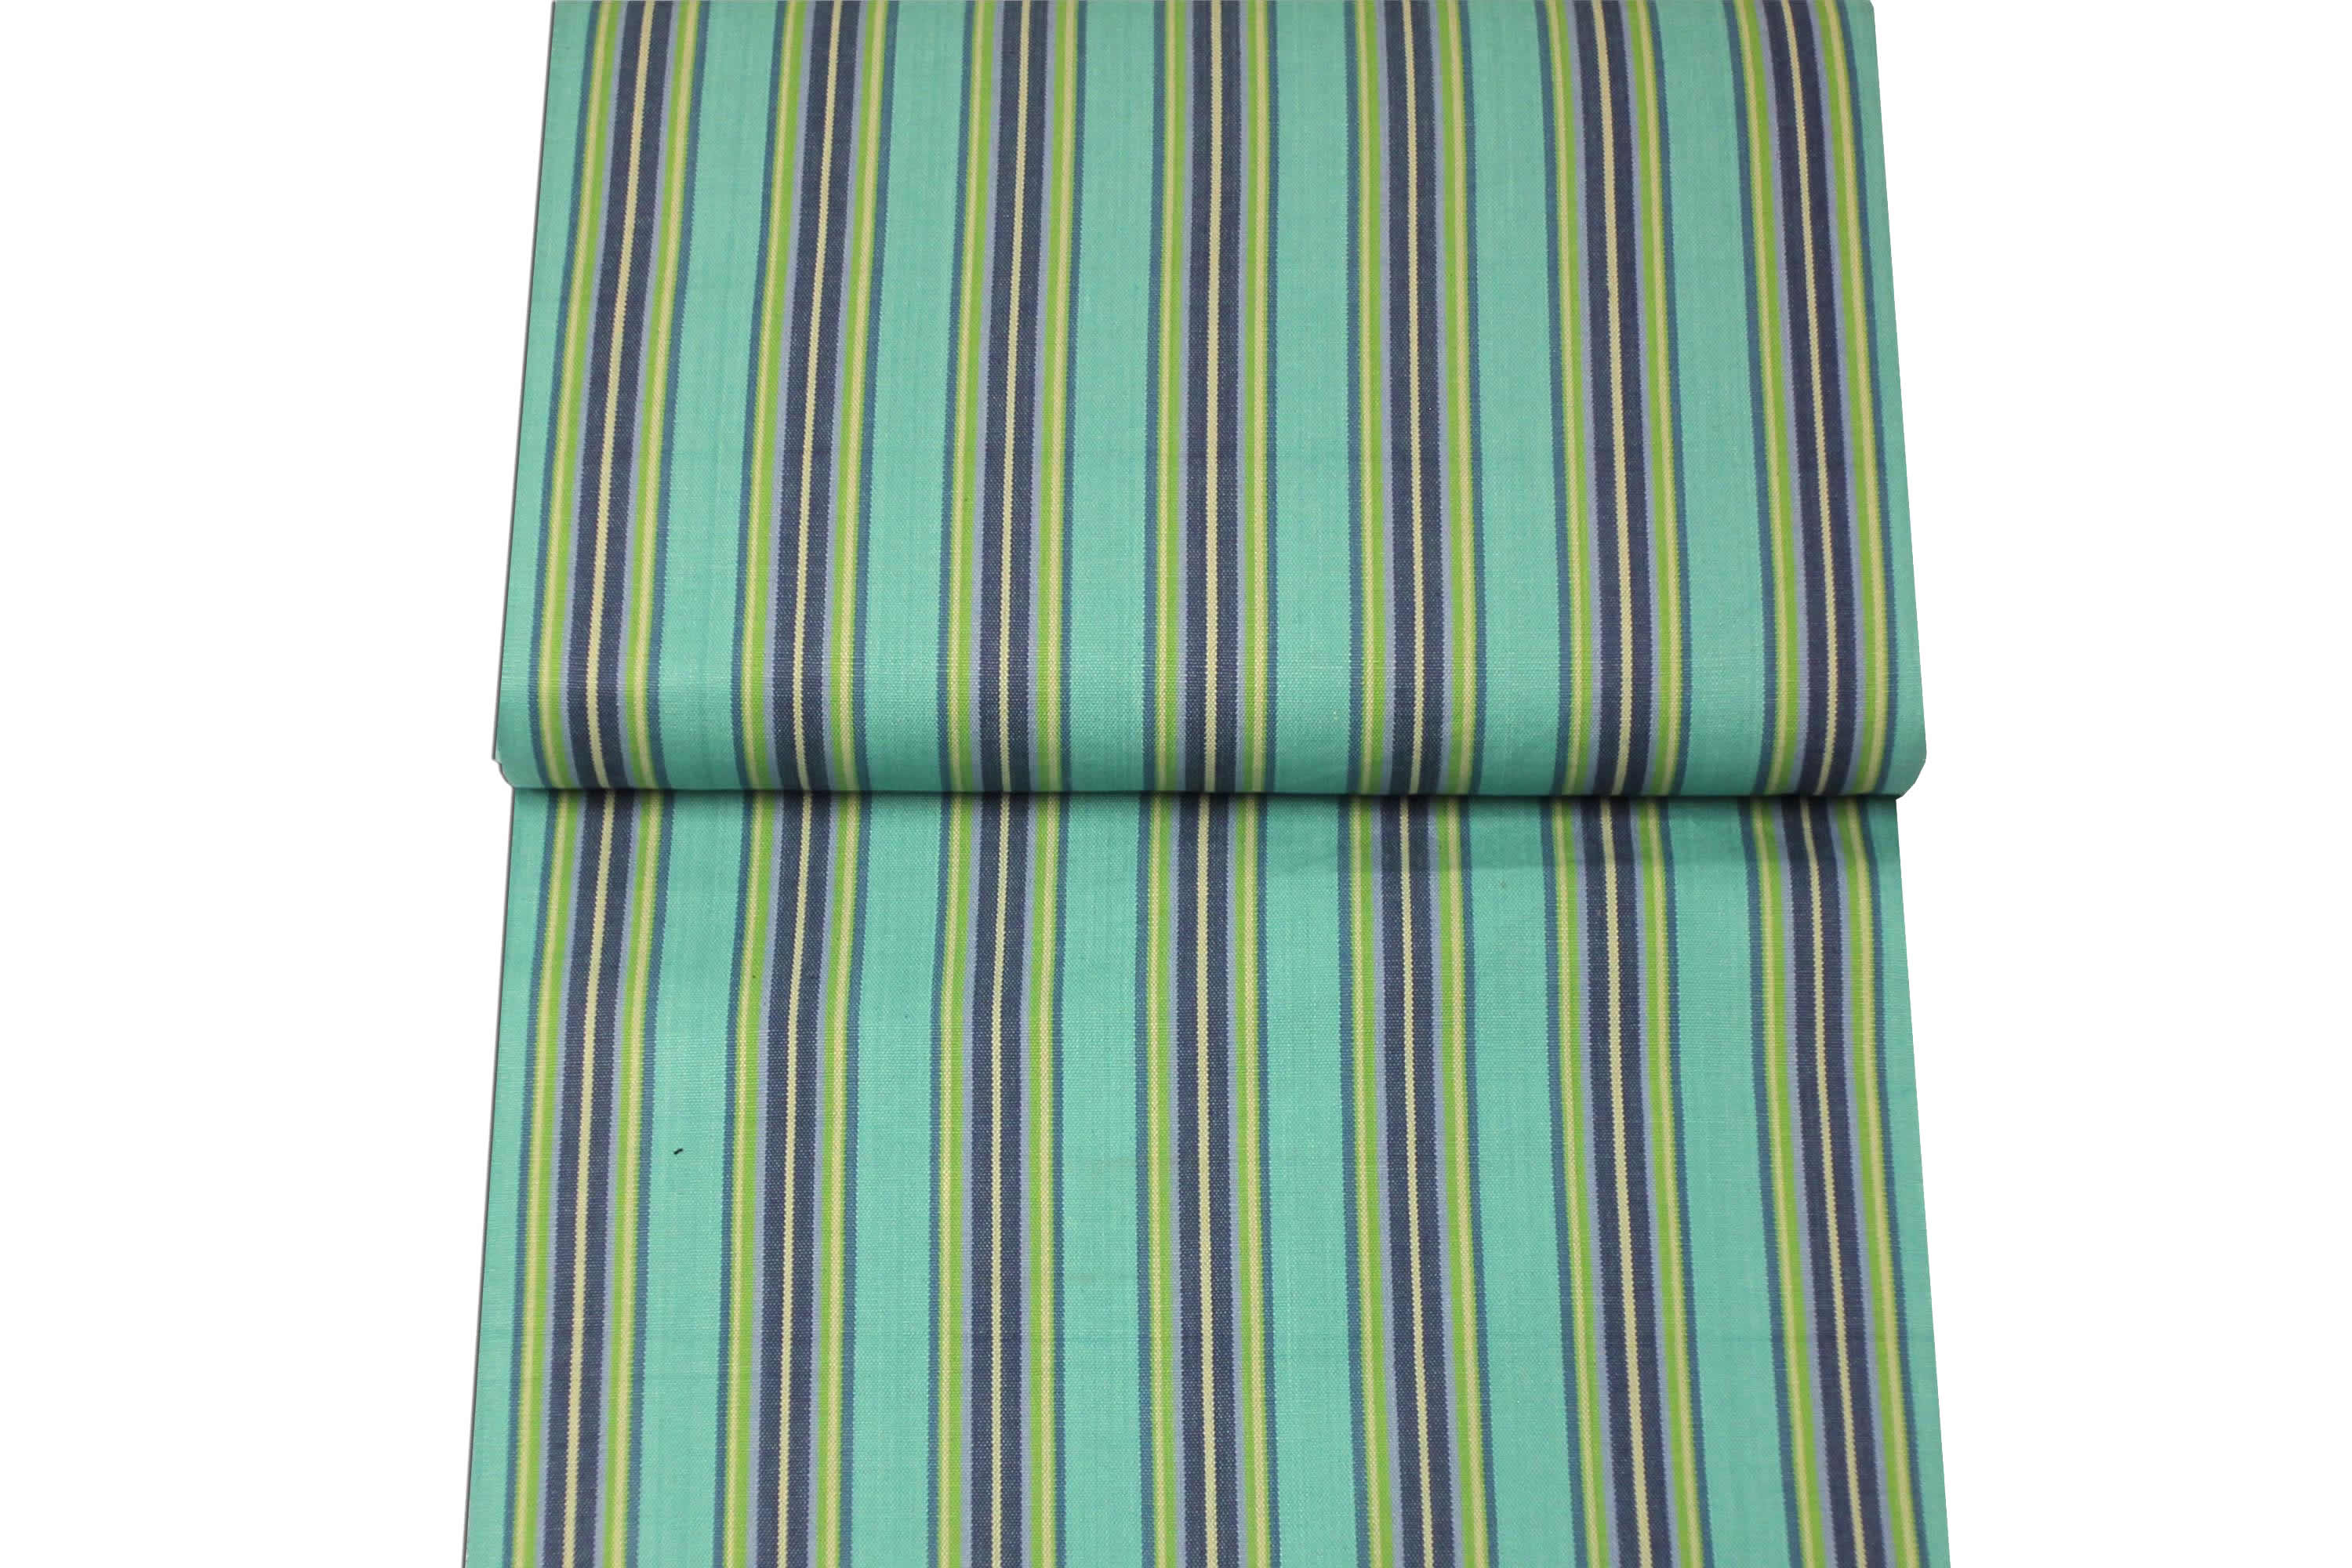 Turquoise Deckchair Canvas | Striped Deck Chair Fabrics Fencing Stripe